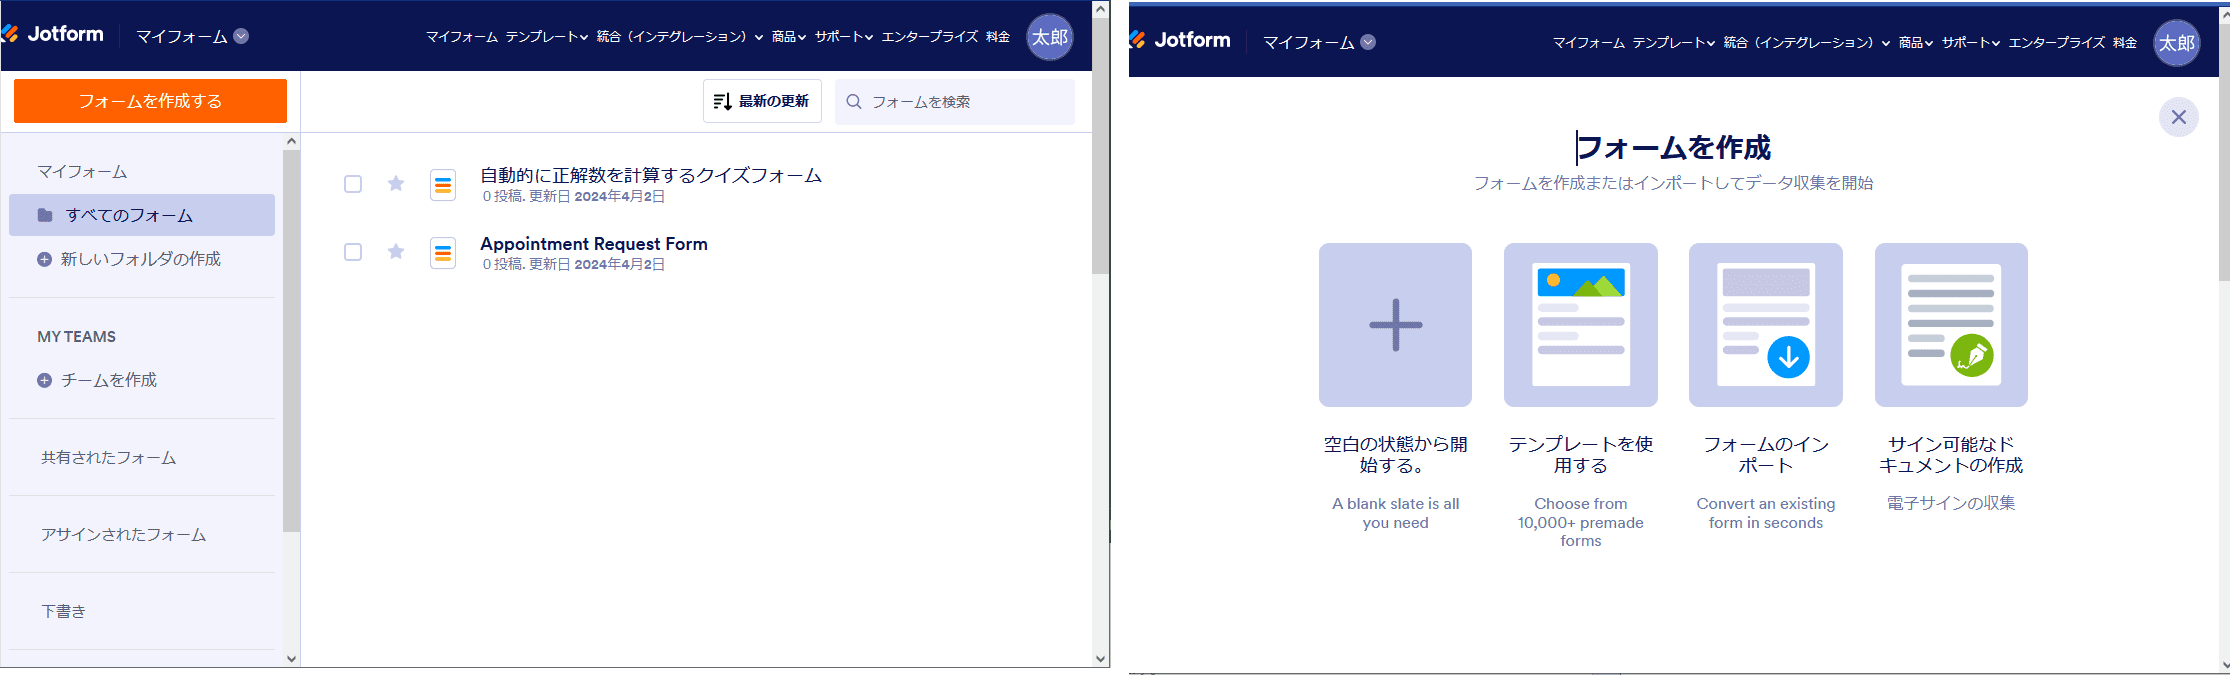 PDFフォーム作成ツールJotform